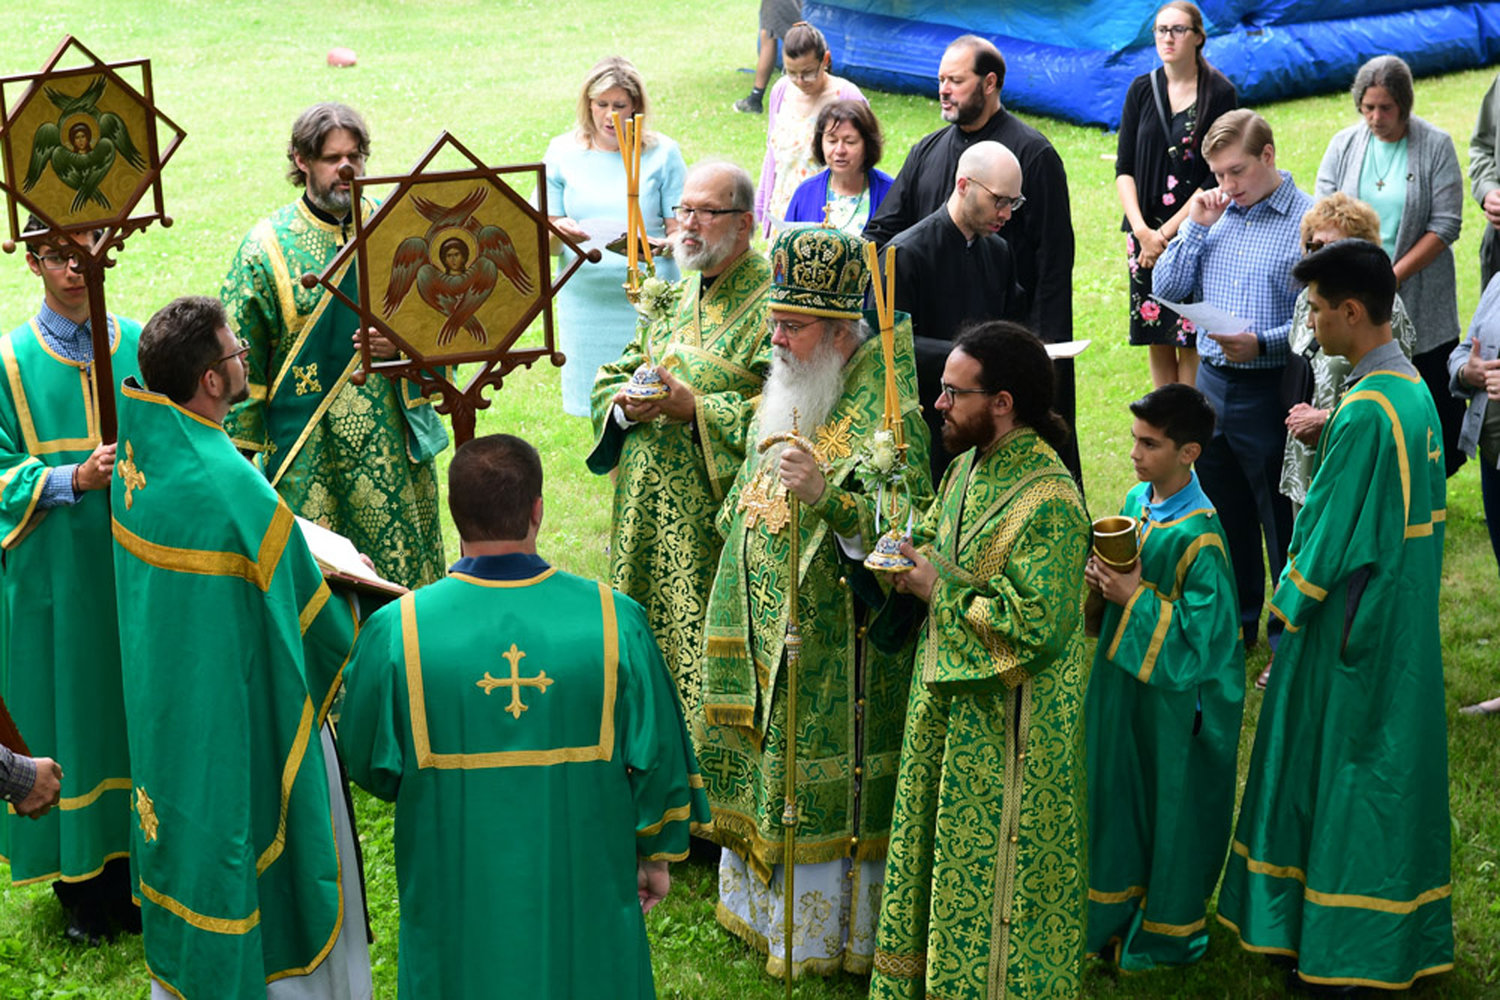 Metropolitan Tikhon, flanked by Subdeacon Alexis Liberovsky, left, and Subdeacon Nilus Klingel during the outdoor gospel reading.